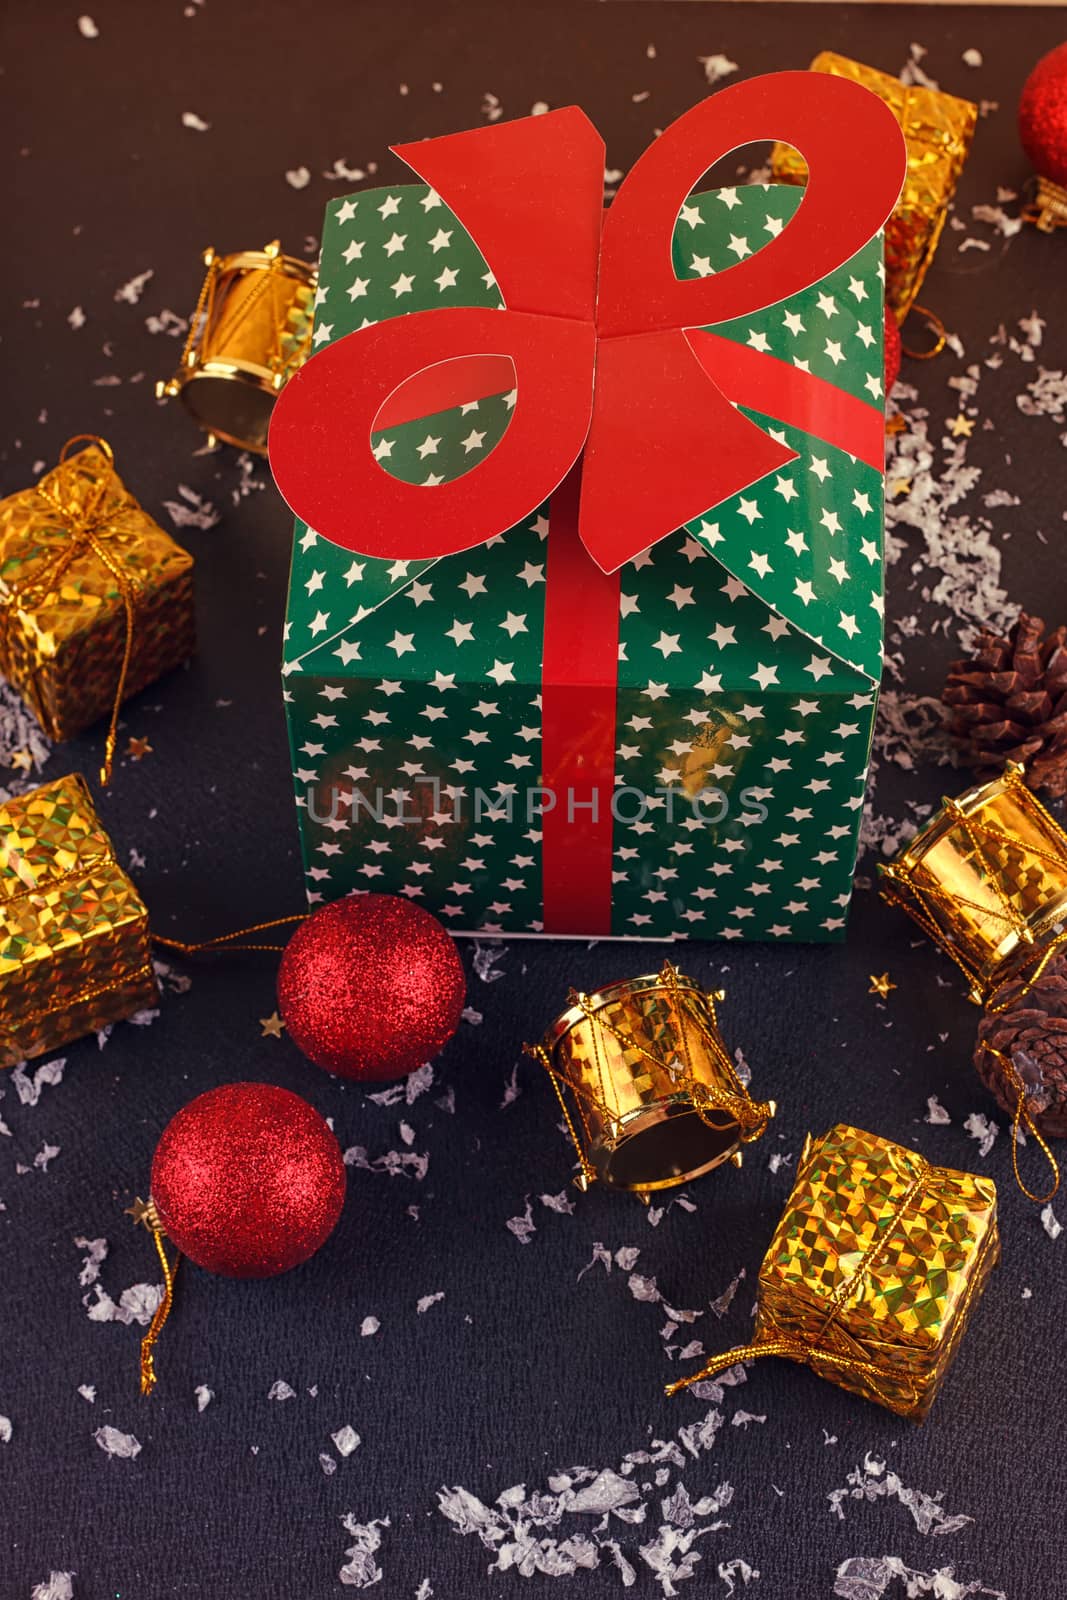 Christmas decorative gift box, ball on black background